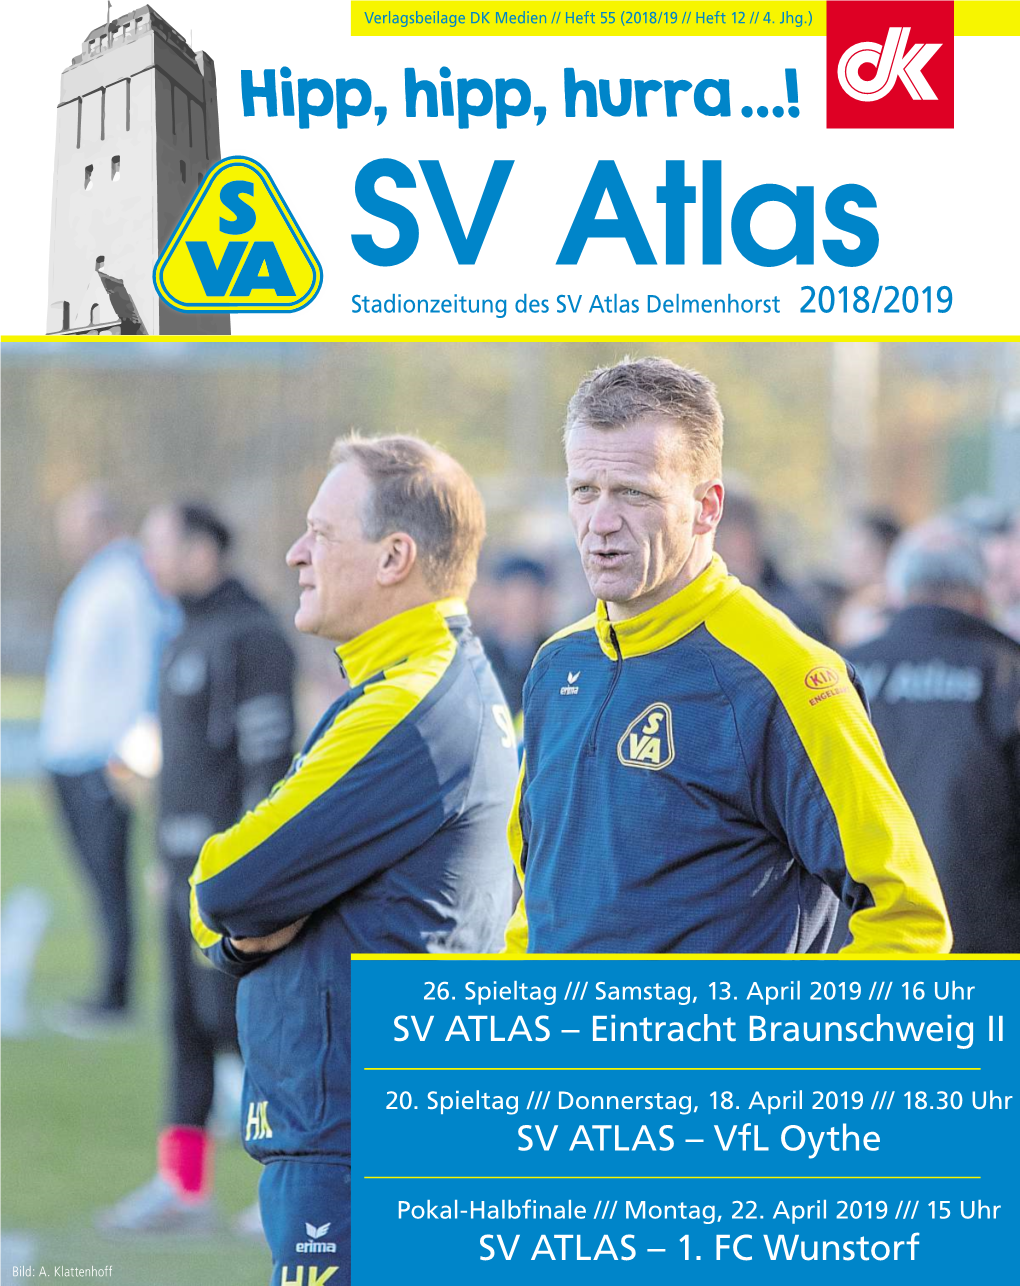 SV Atlas Stadionzeitung Des SV Atlas Delmenhorst 2018/2019